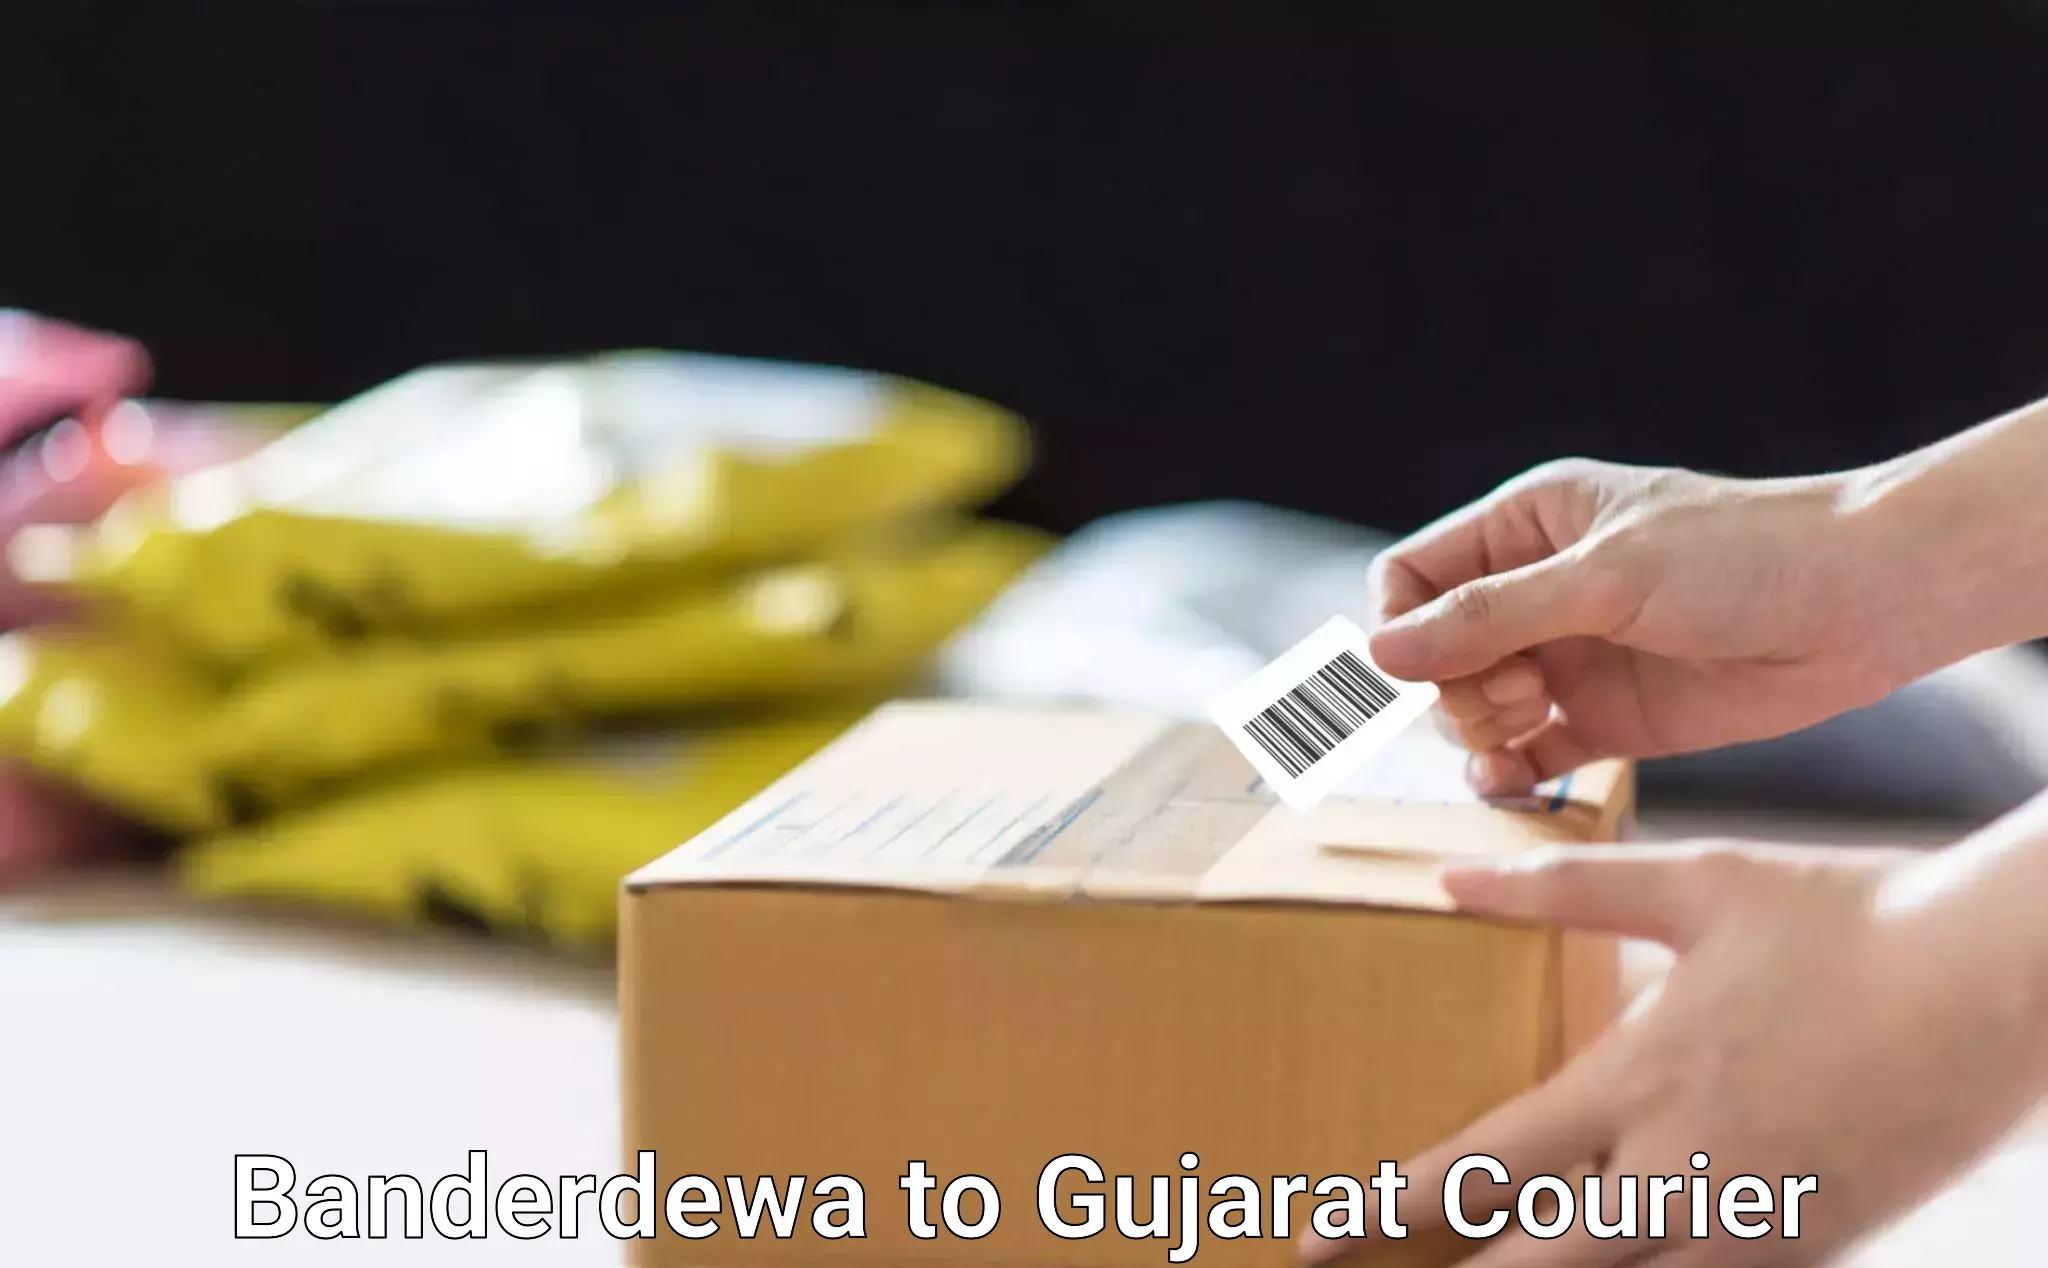 Global delivery options Banderdewa to Kalol Gujarat